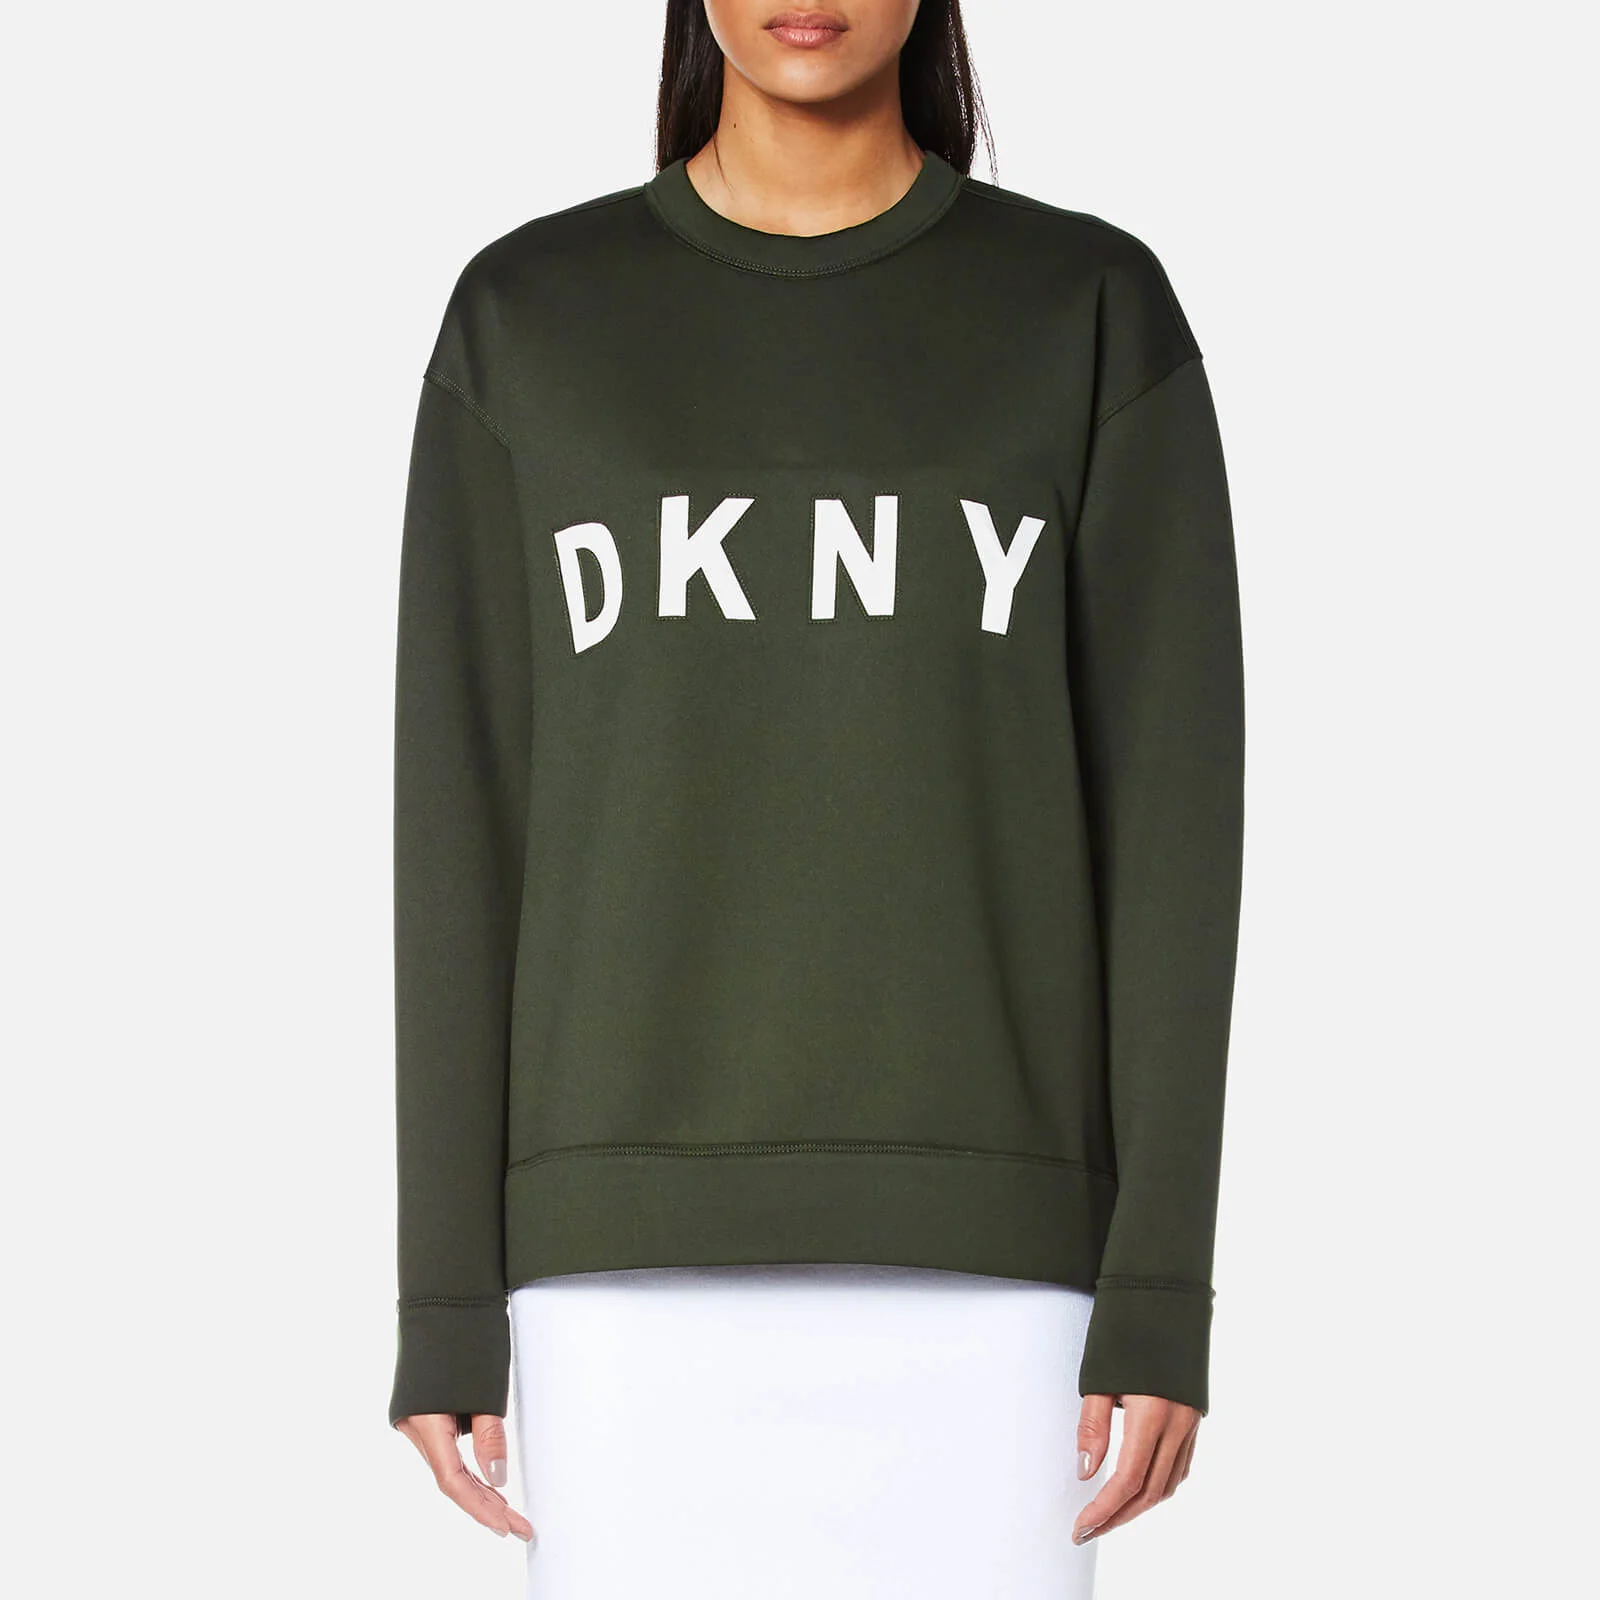 DKNY Women's Extra Long Sleeve Crew Neck Sweatshirt with Logo - Military/White Image 1